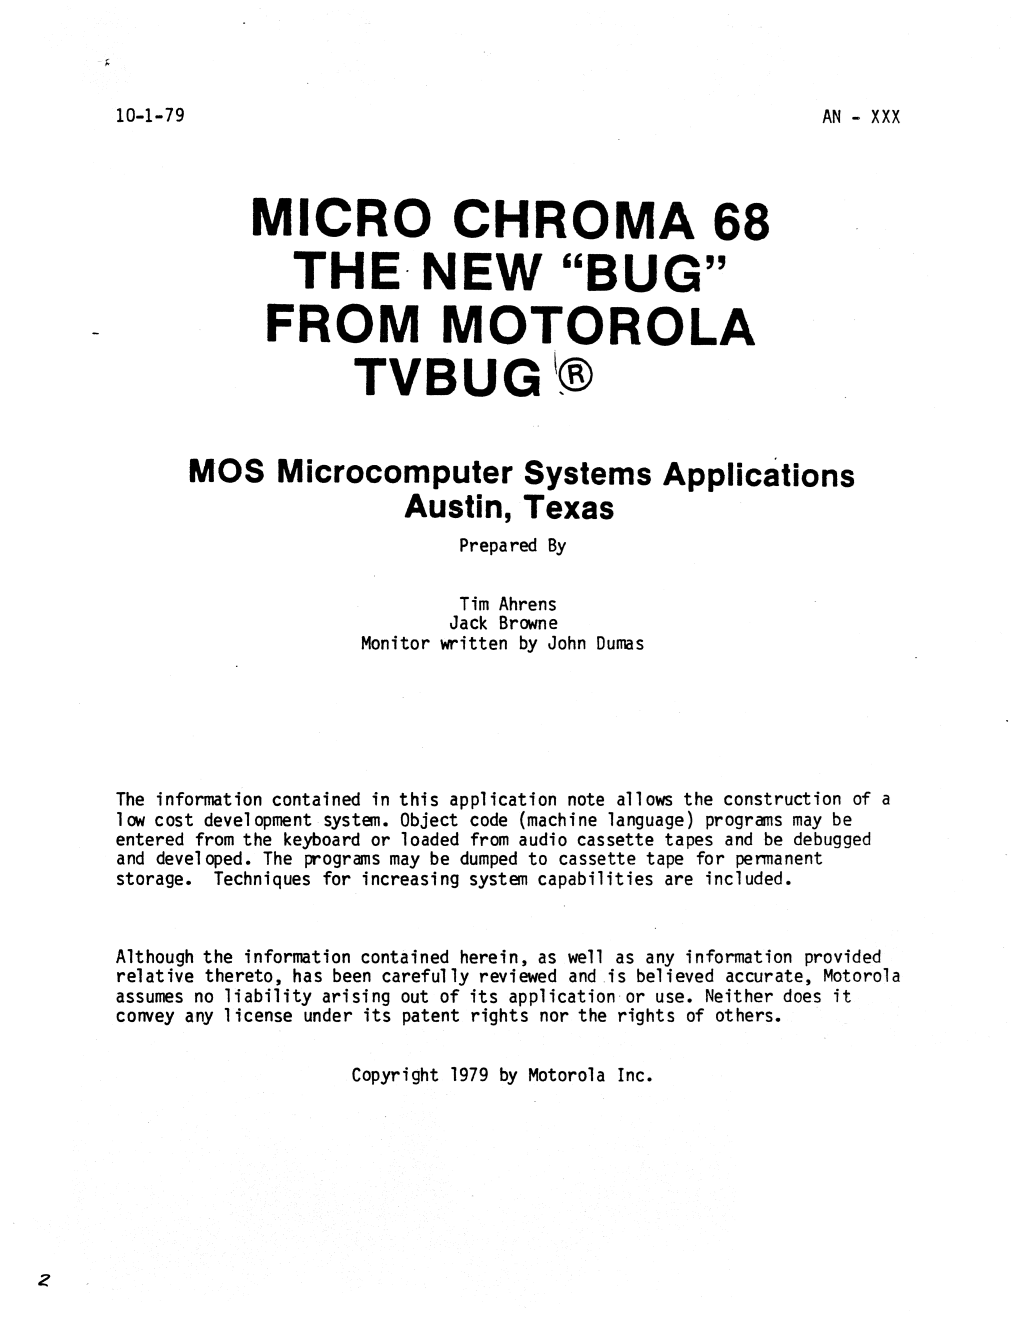 Micro Chroma 68 from Motorola